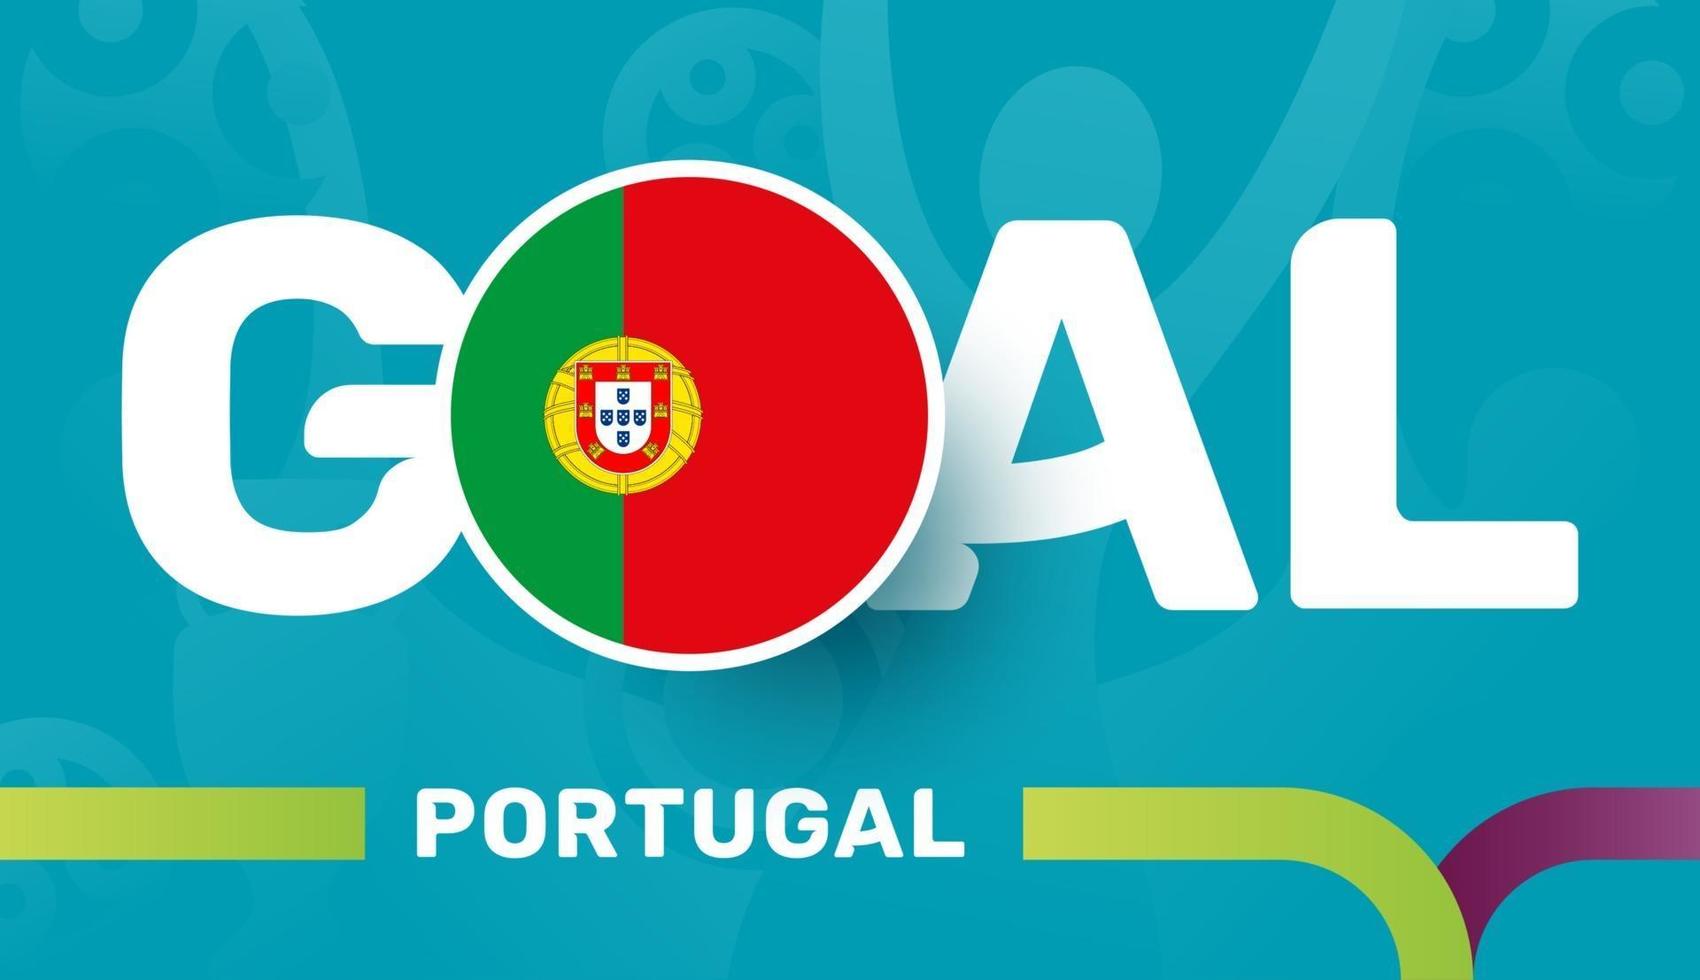 portugal flag and Slogan goal on european 2020 football background. soccer tournamet Vector illustration